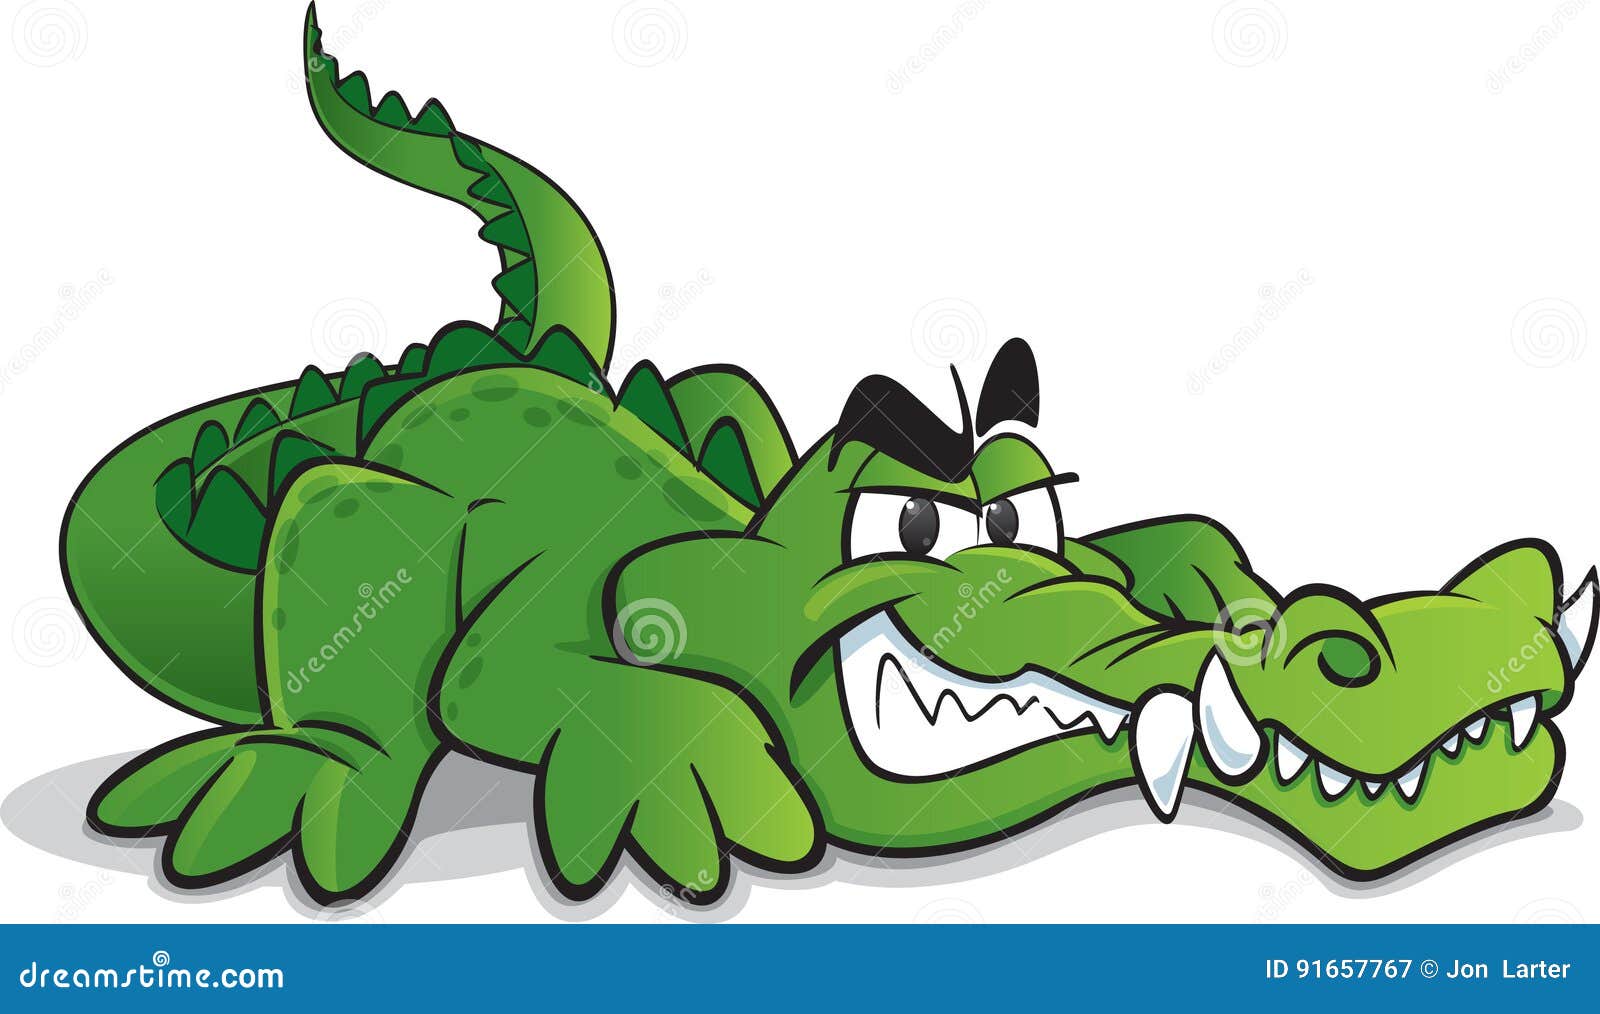 grinning crocodile